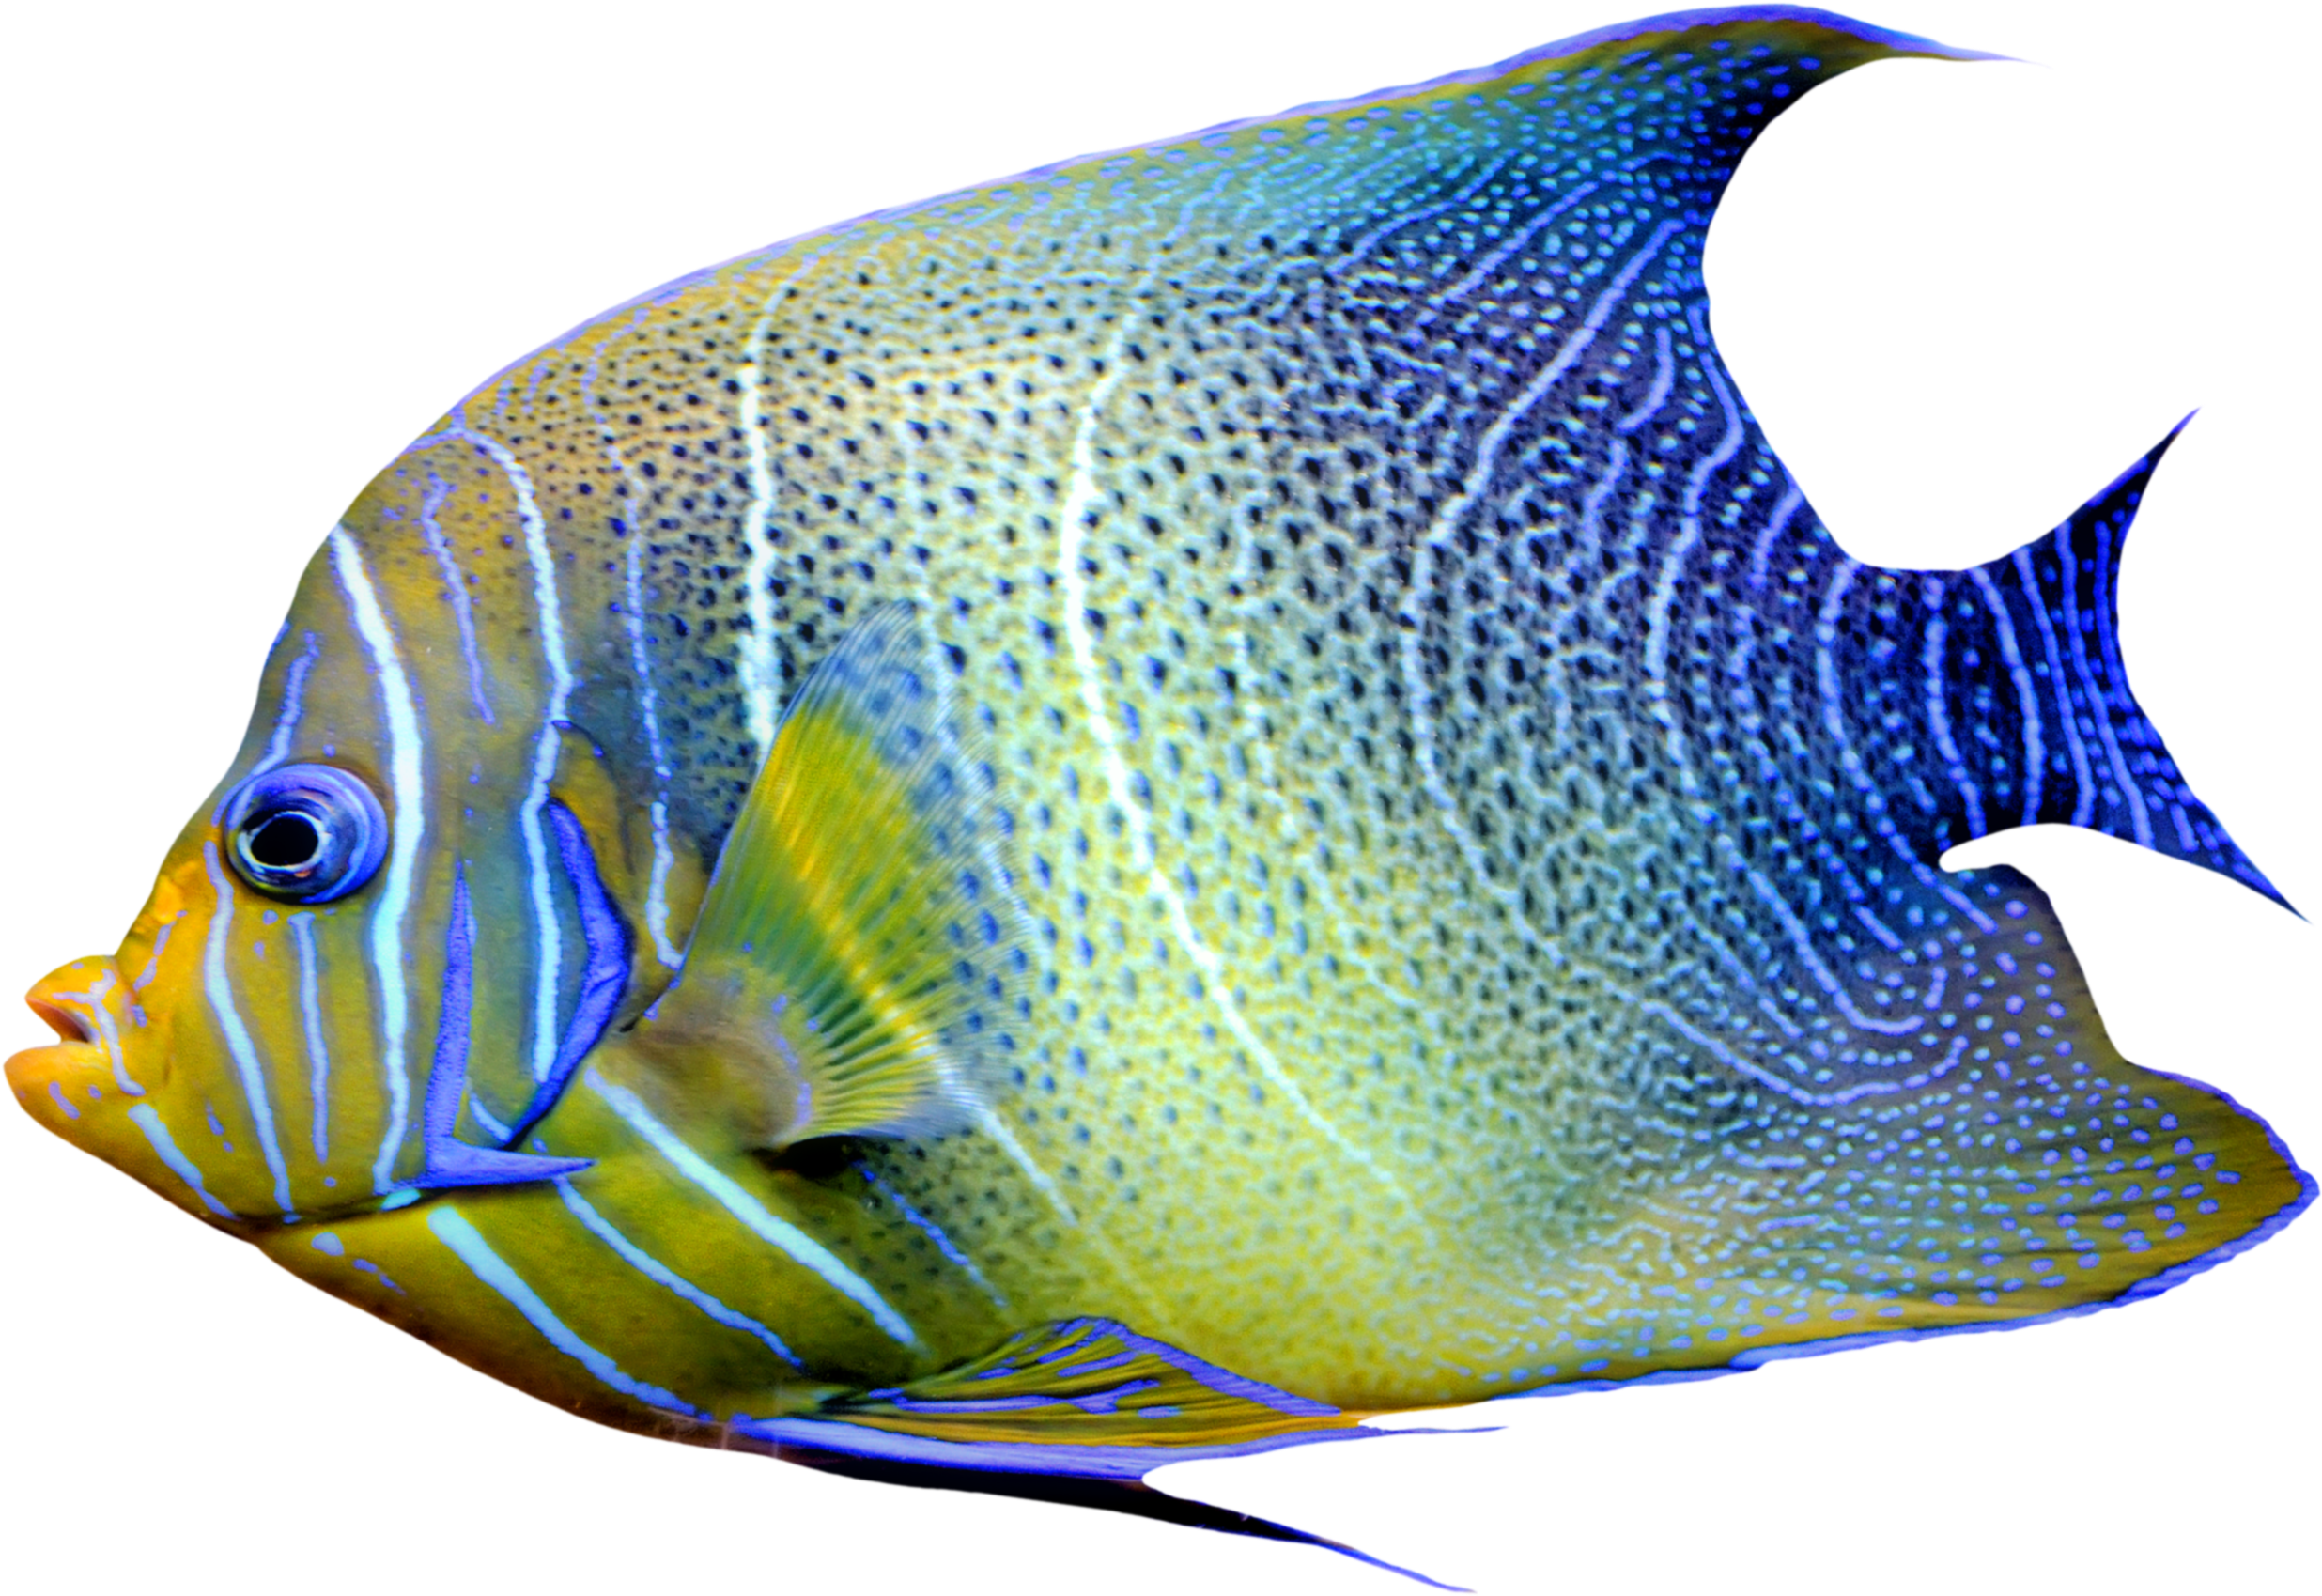 A Close Up Of A Fish